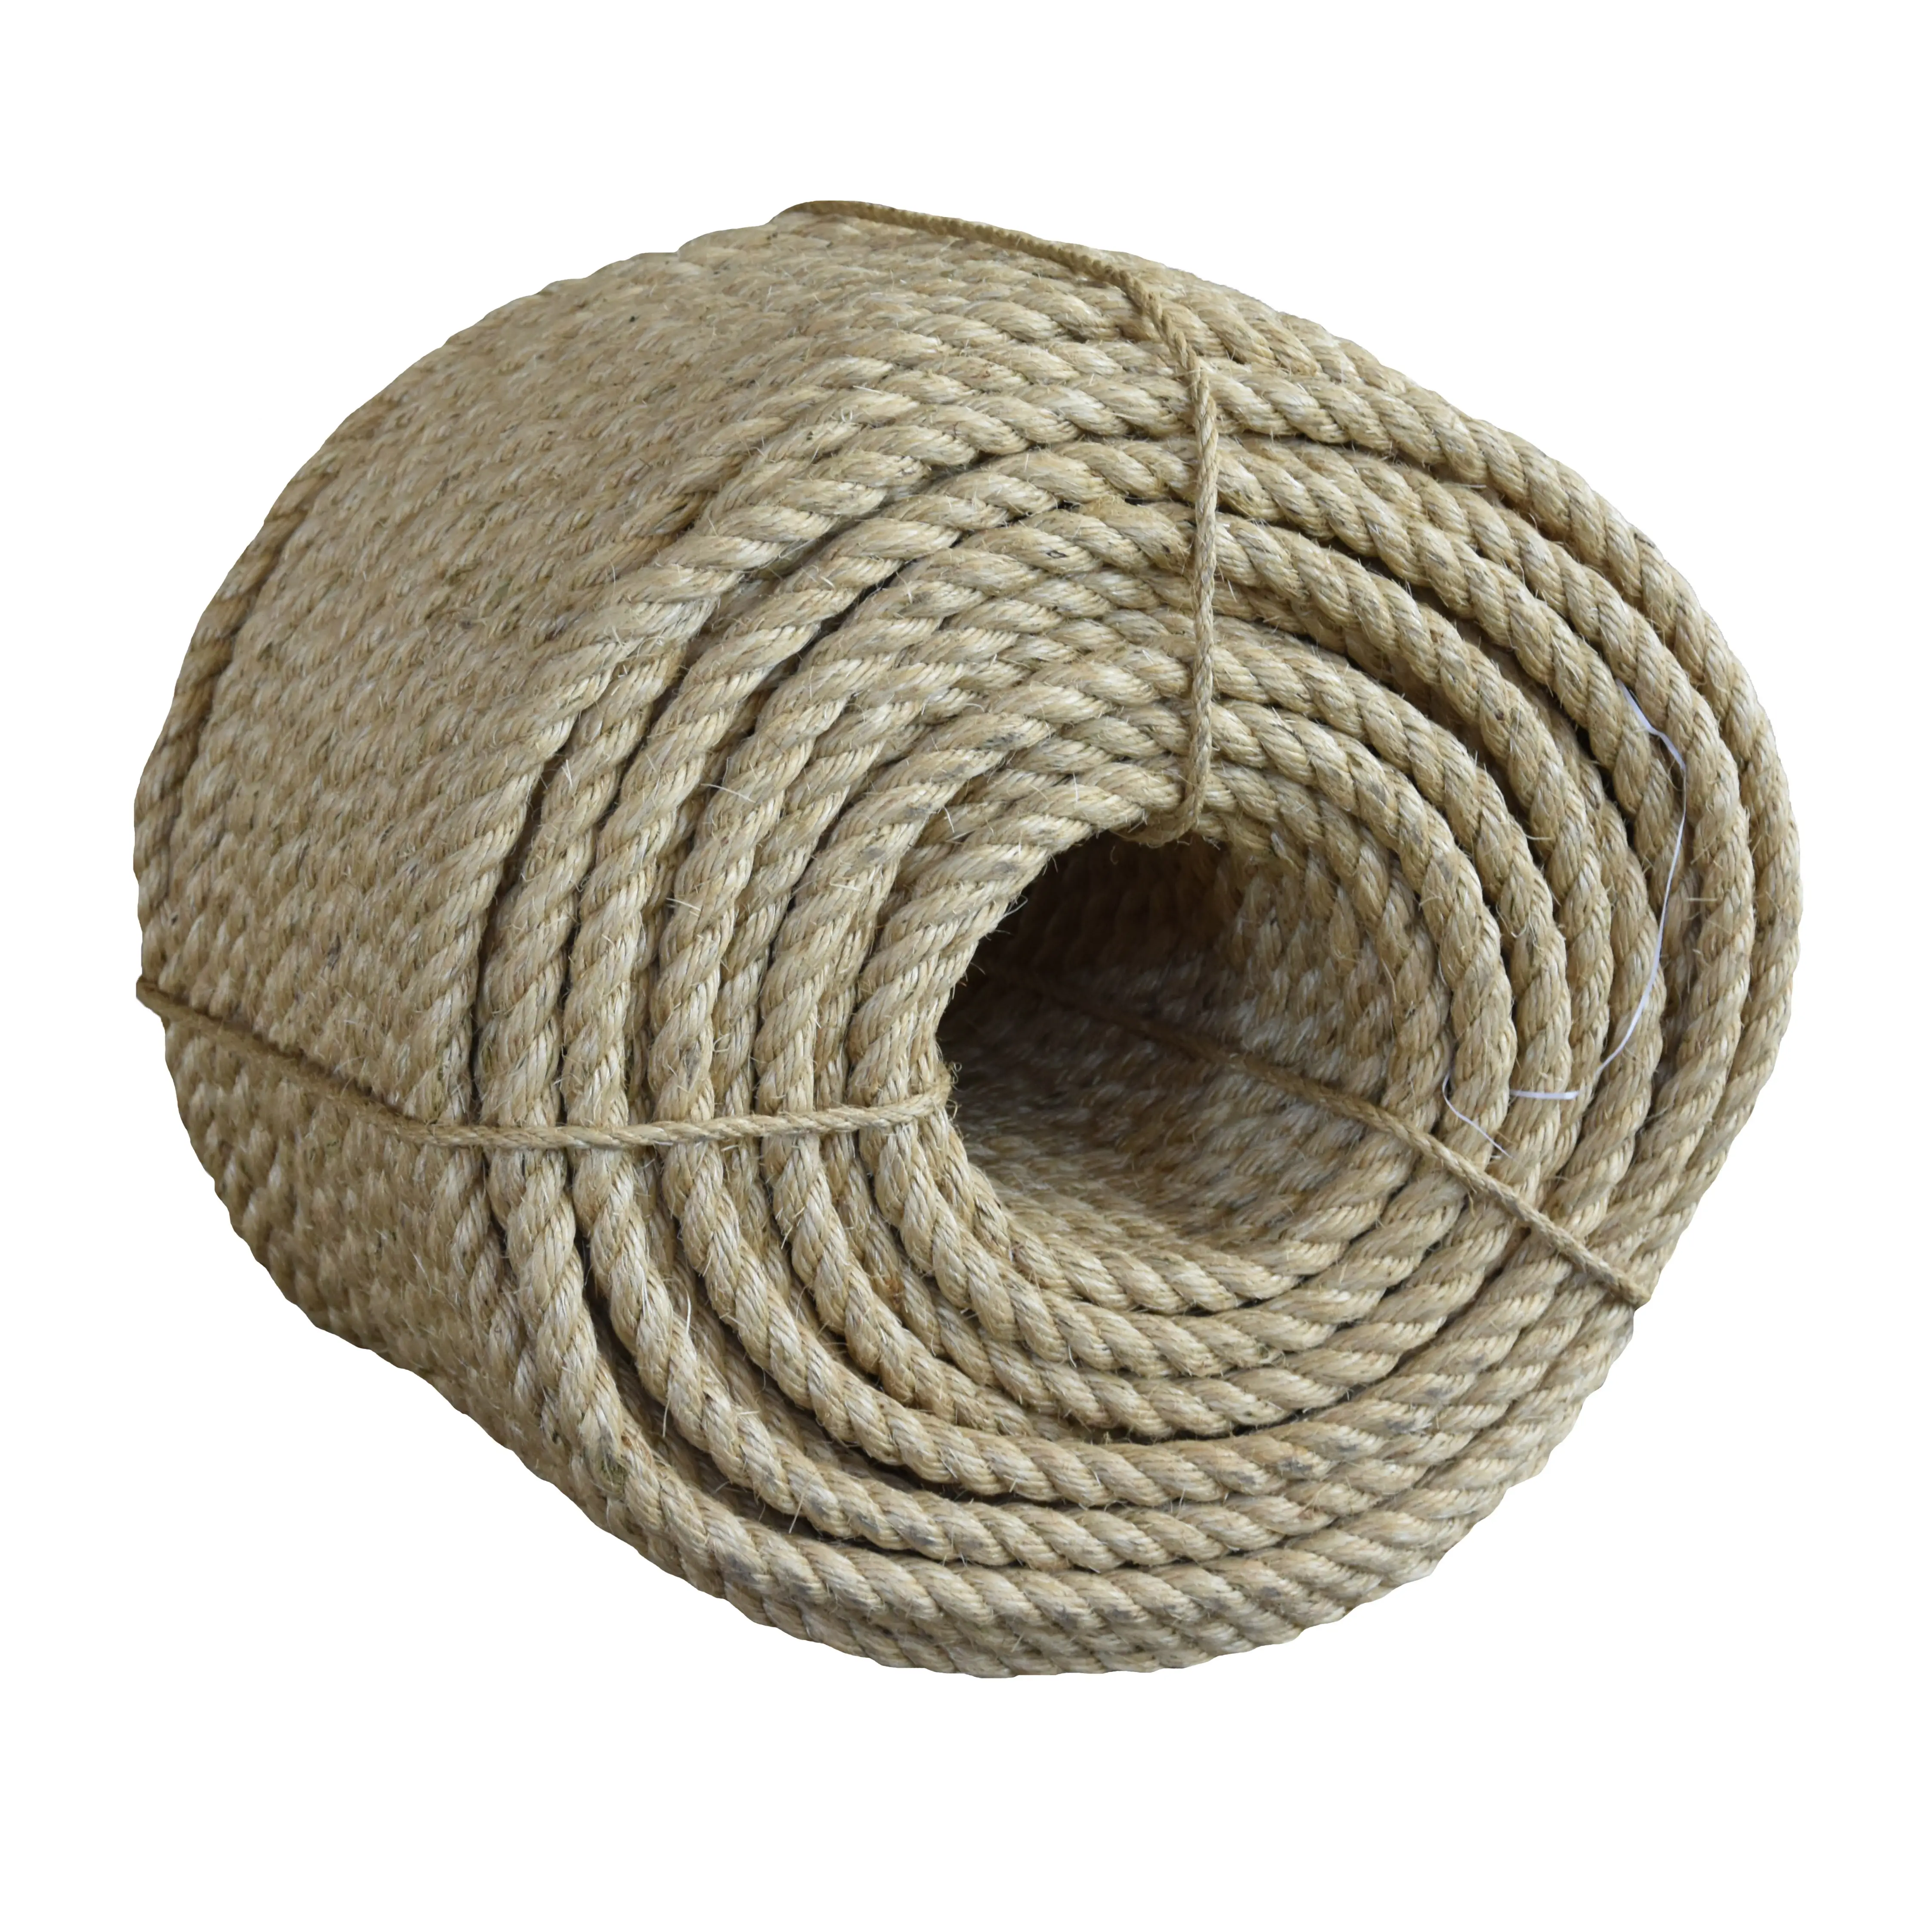 Customized Twisted Manila Rope Natural Jute Twine brown sisal rope